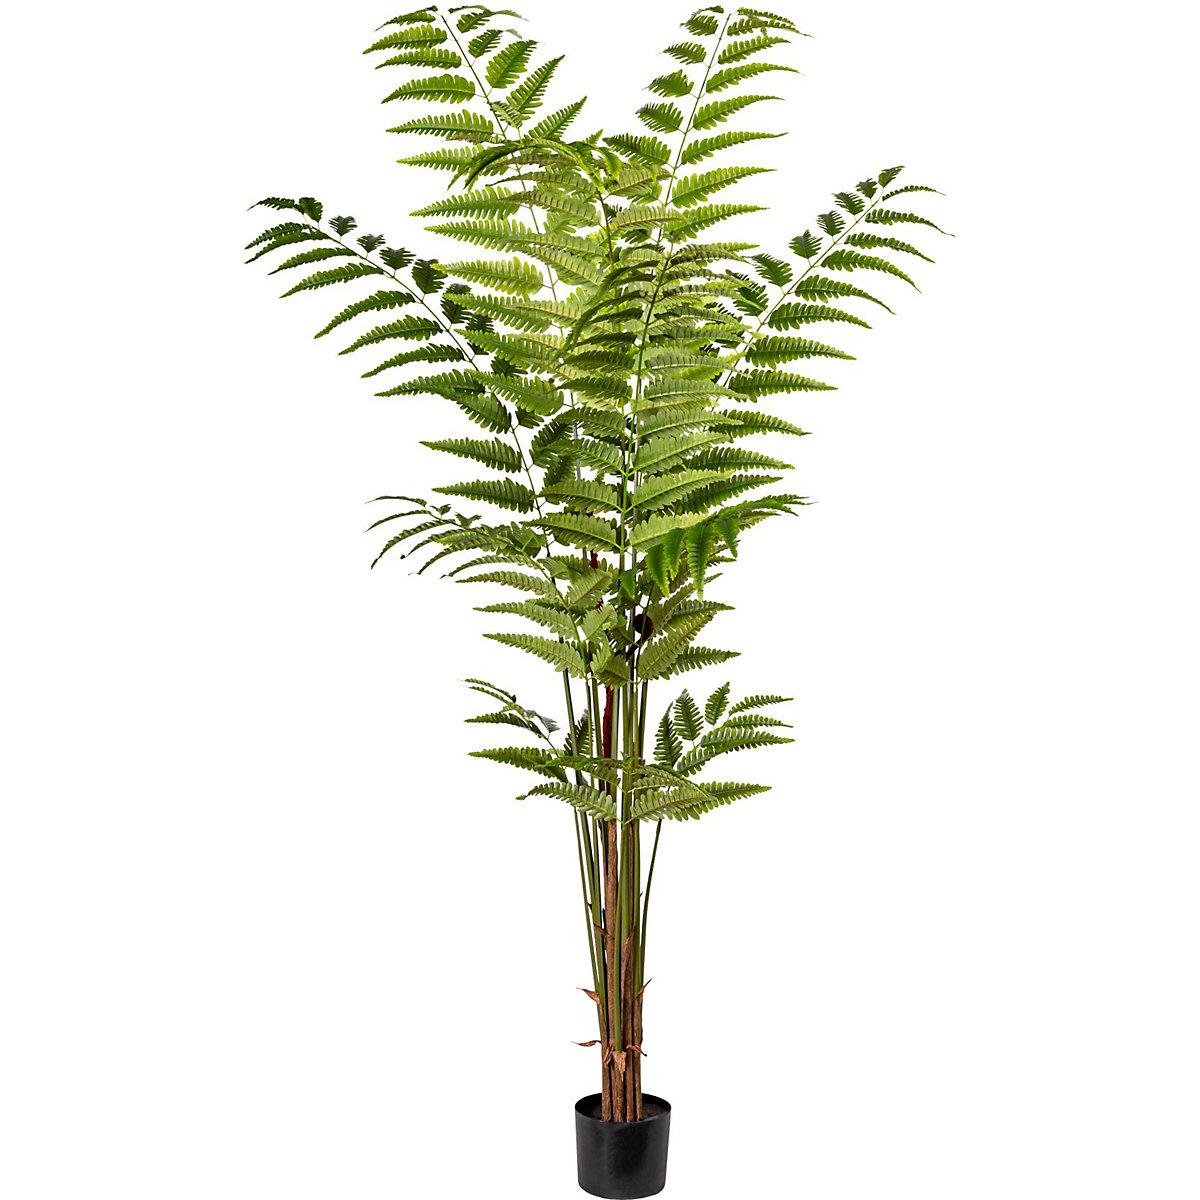 Leatherleaf fern plant